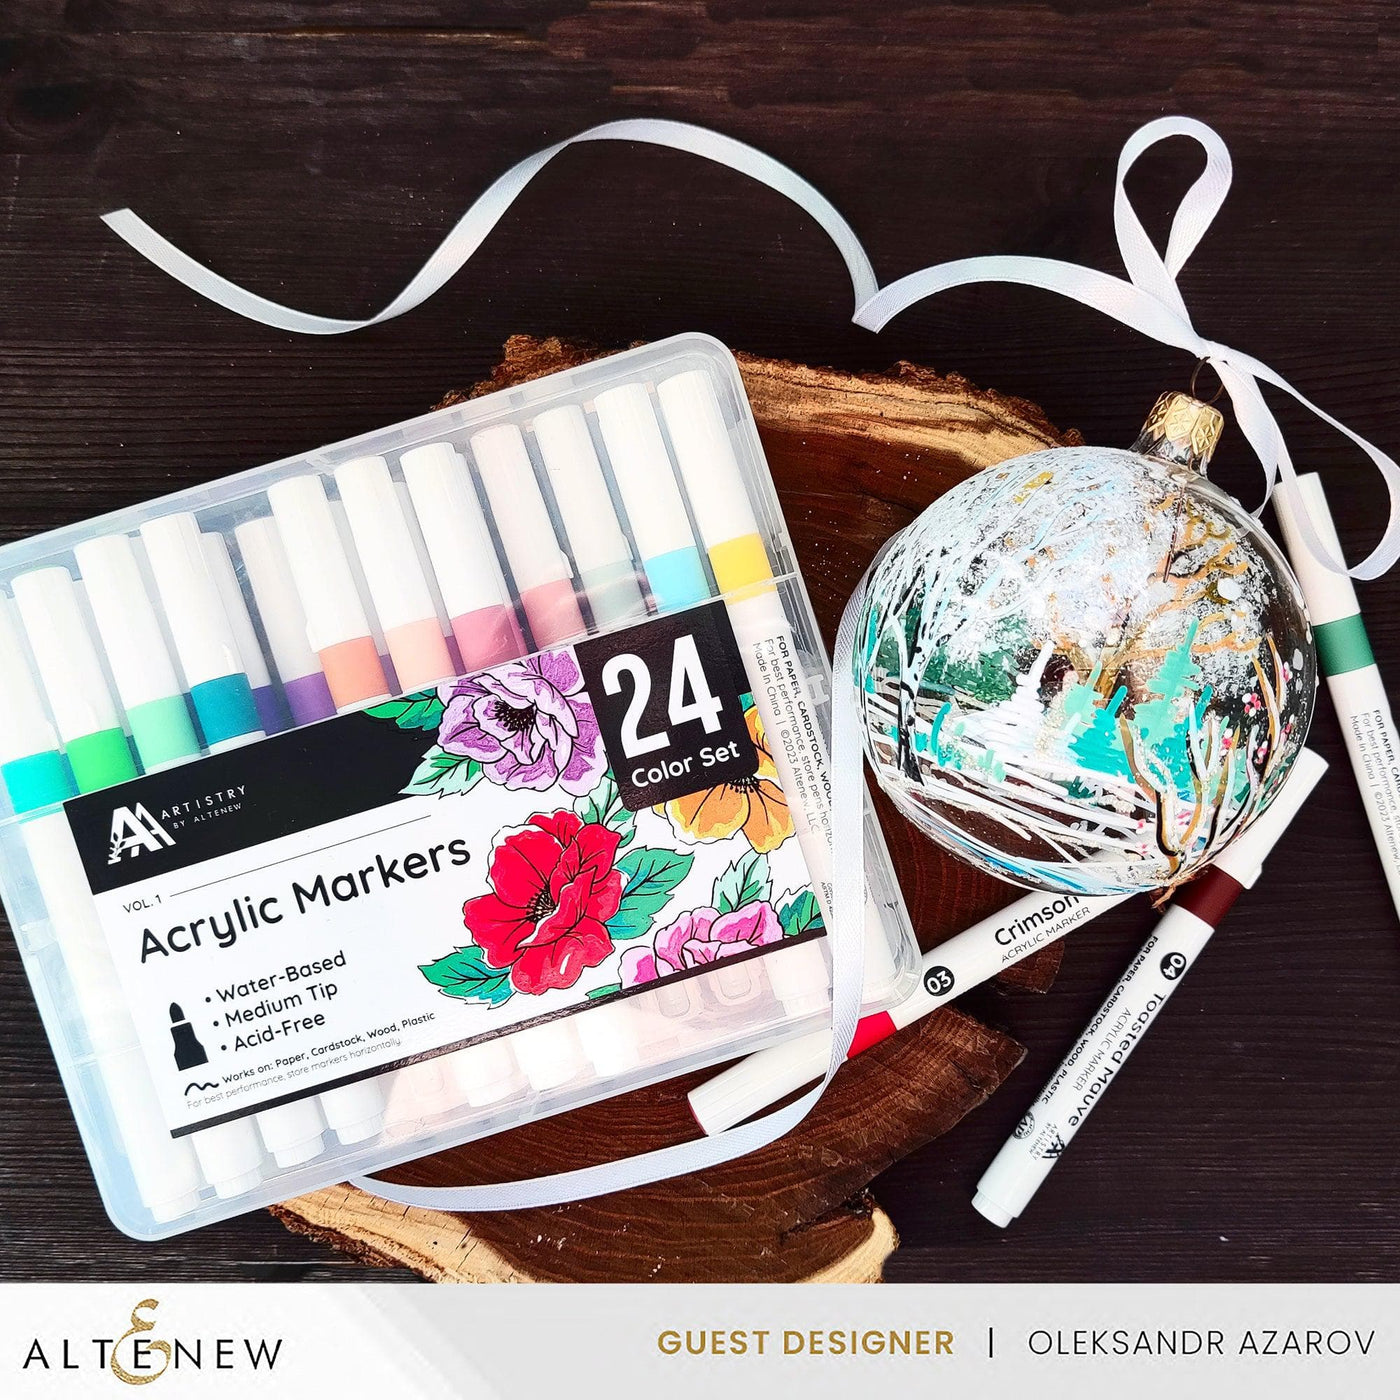 Acrylic Marker 24 Color Set - Vol. 1 - Altenew - January 2024